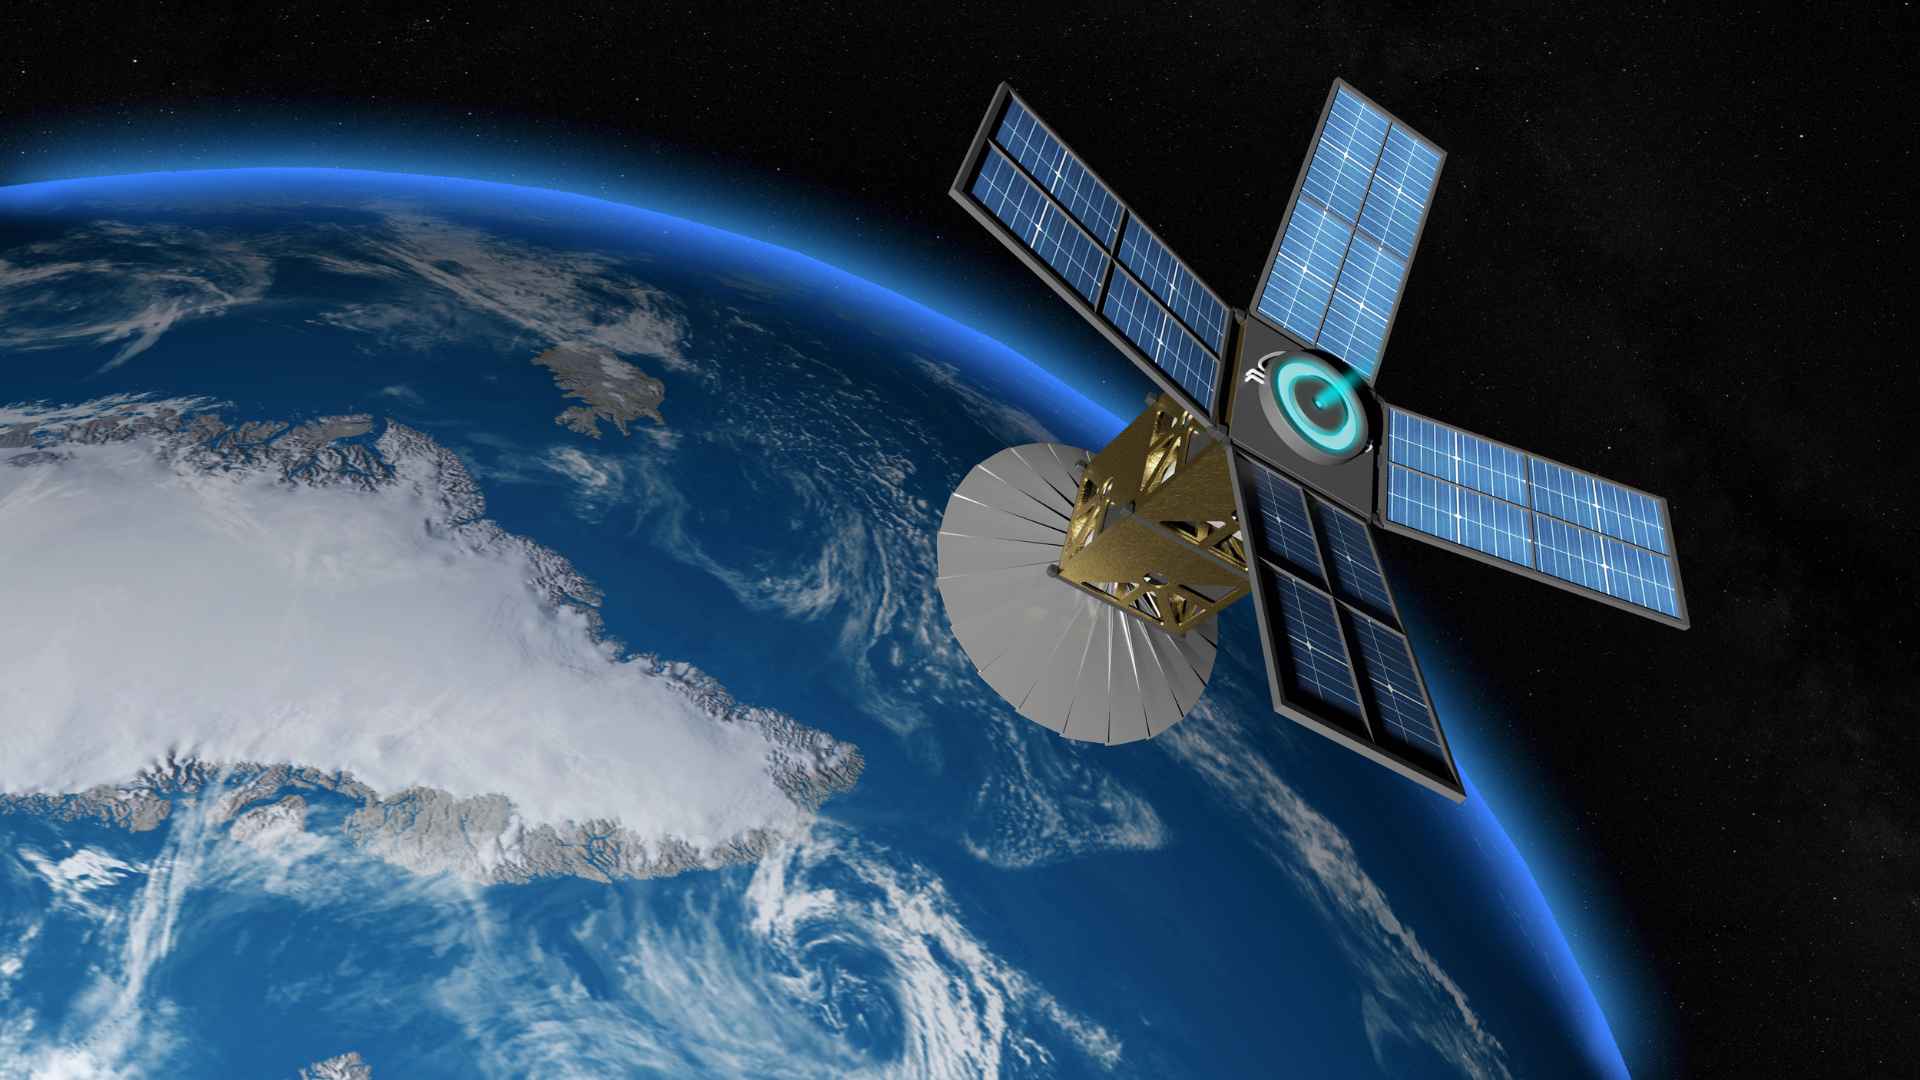 Satellite orbiting the earth